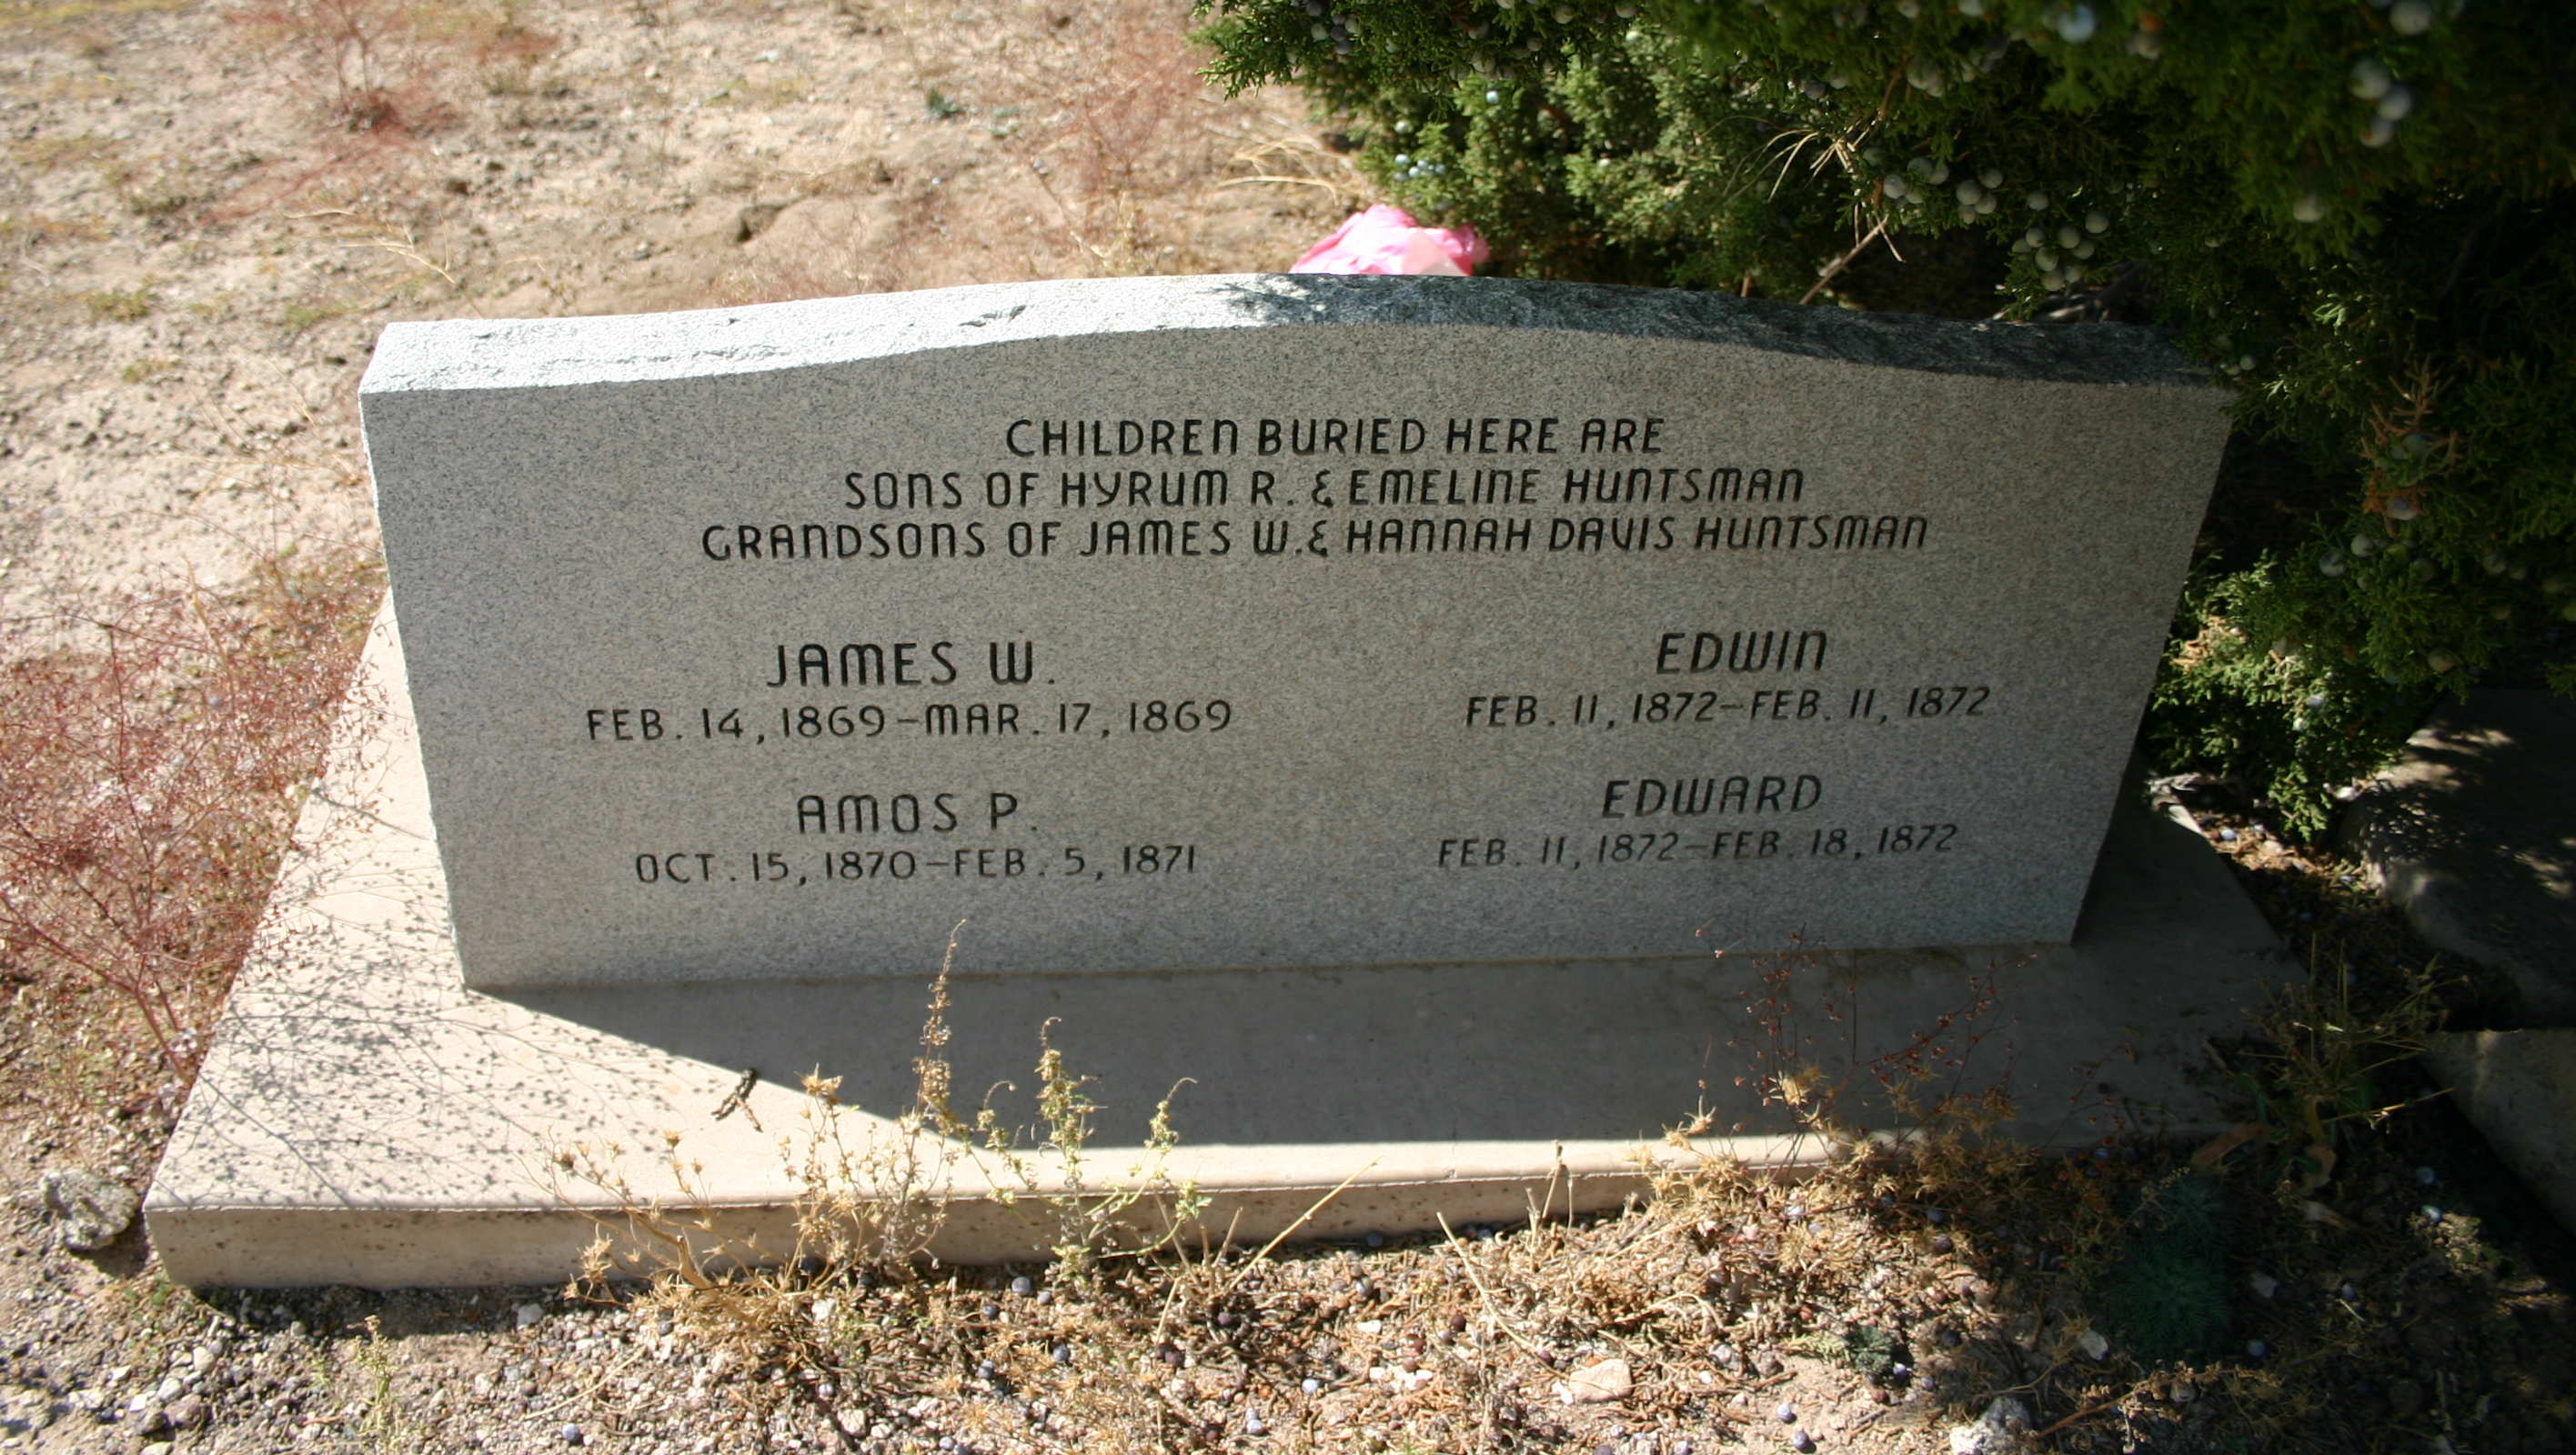 Huntsman sons gravestone at the Hebron Cemetery